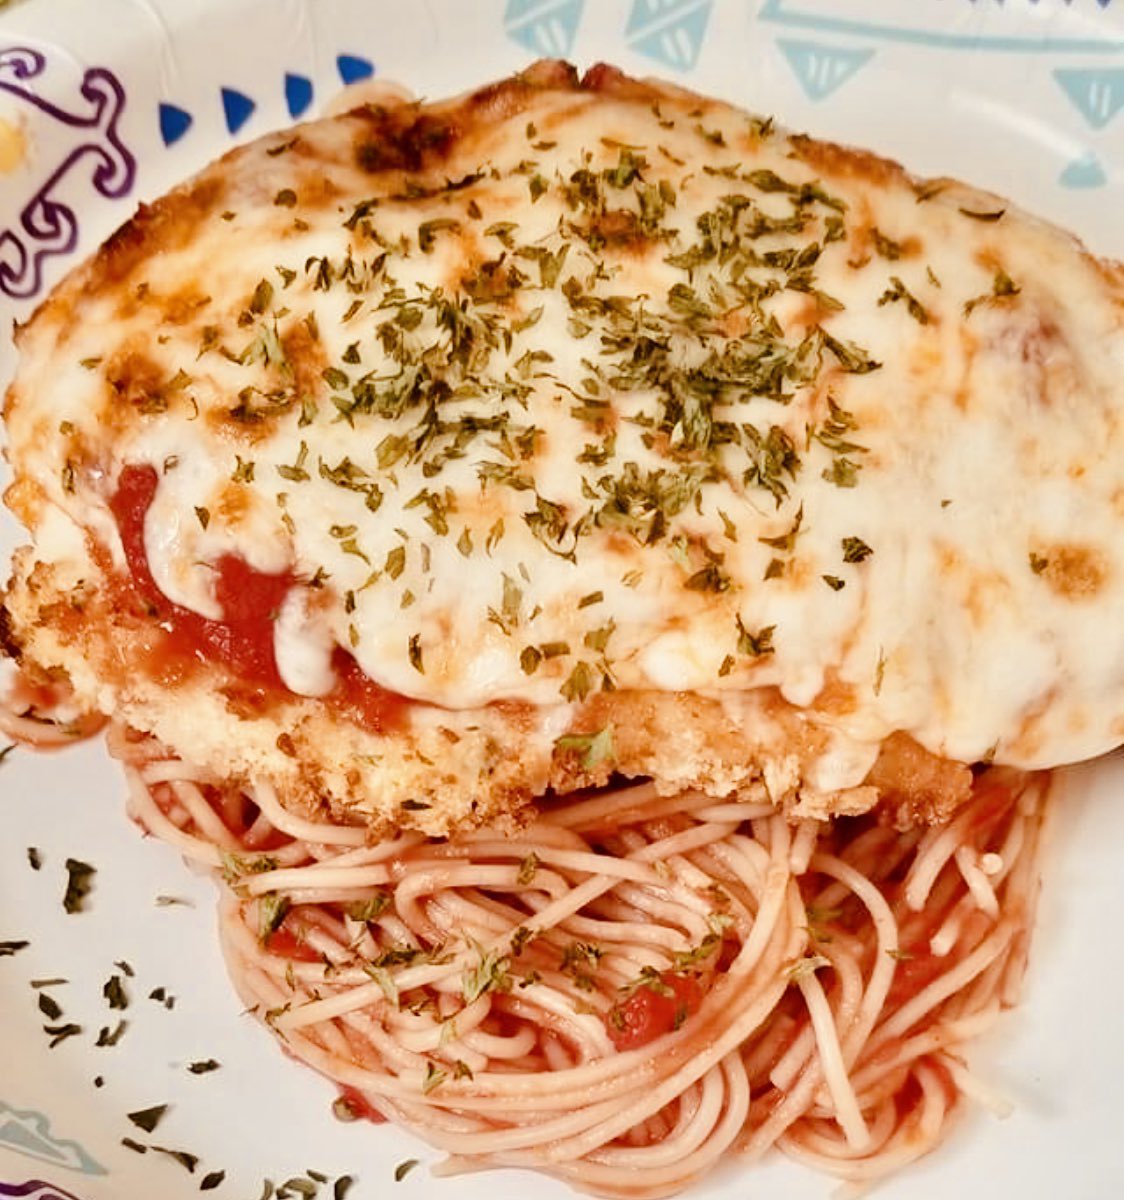 #ChickenParm #Spaghetti #HomeMade #GrandmasRecipe #FreshBasil #OrganicOregano #EatPGH #TrueCooks #ThatsAmore #LunchIsServed 🍗🍝🌿👨‍🍳👌👌